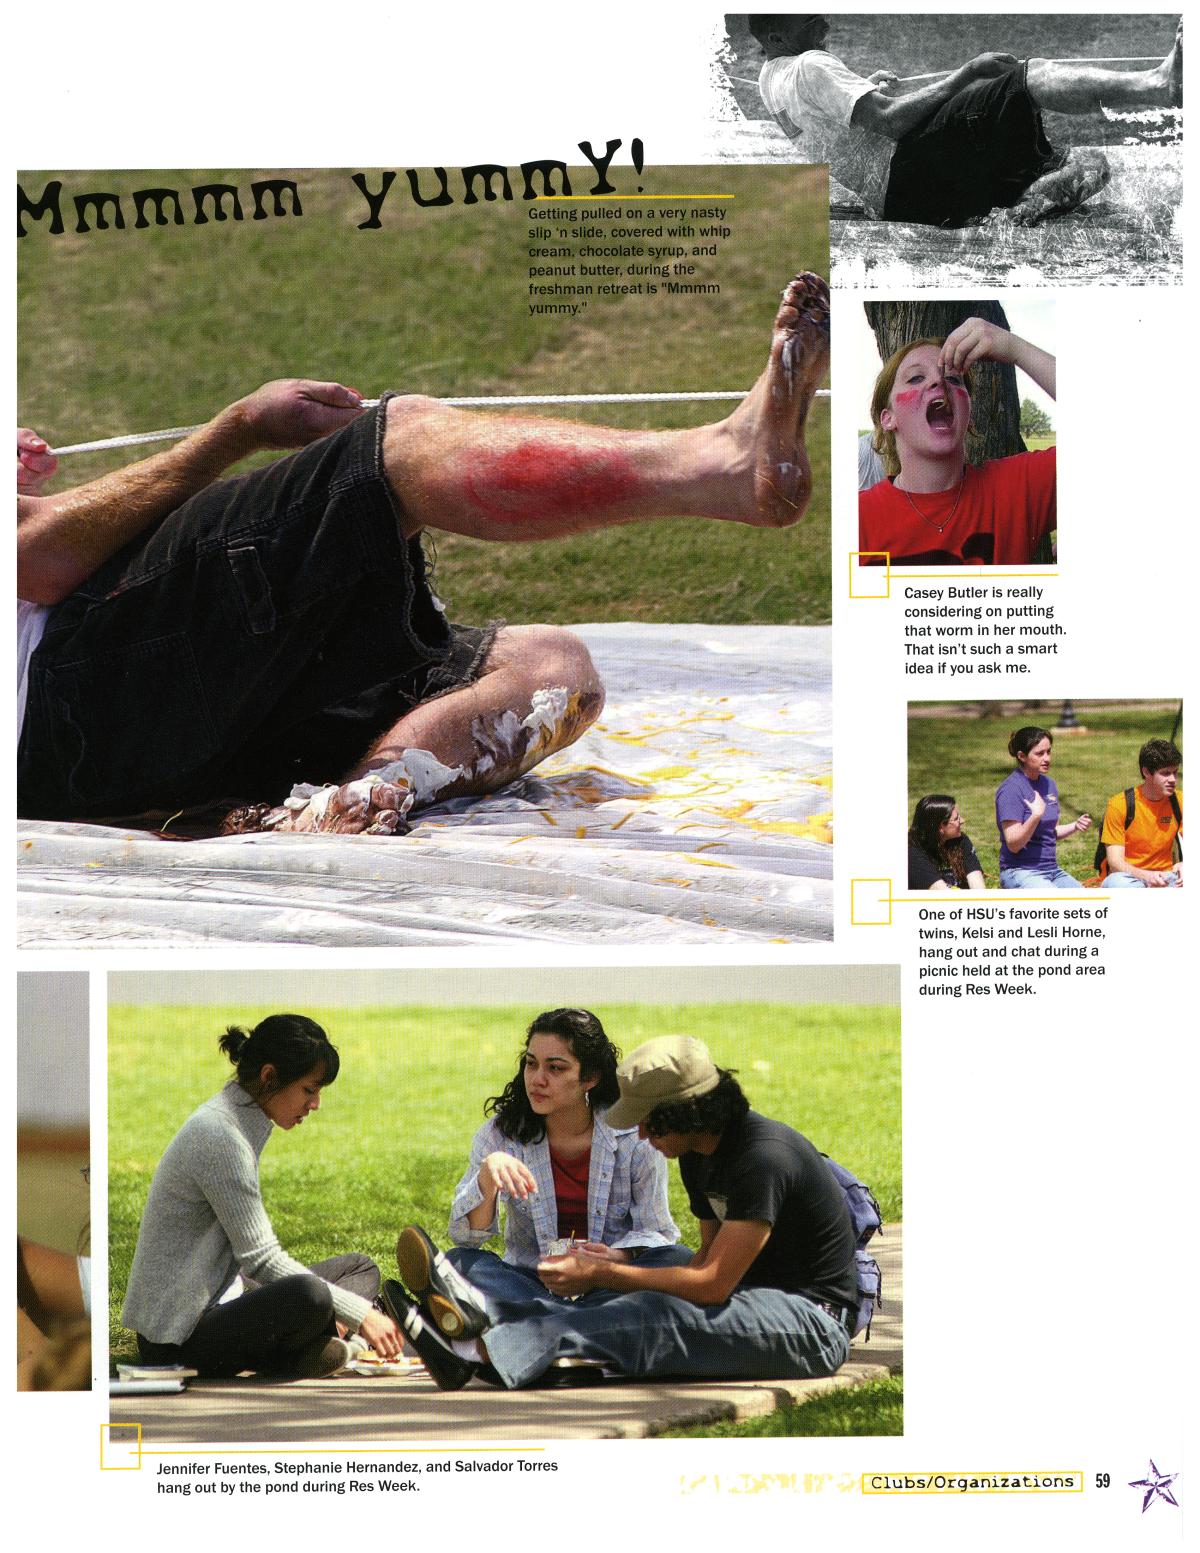 The Bronco, Yearbook of Hardin-Simmons University, 2005
                                                
                                                    59
                                                